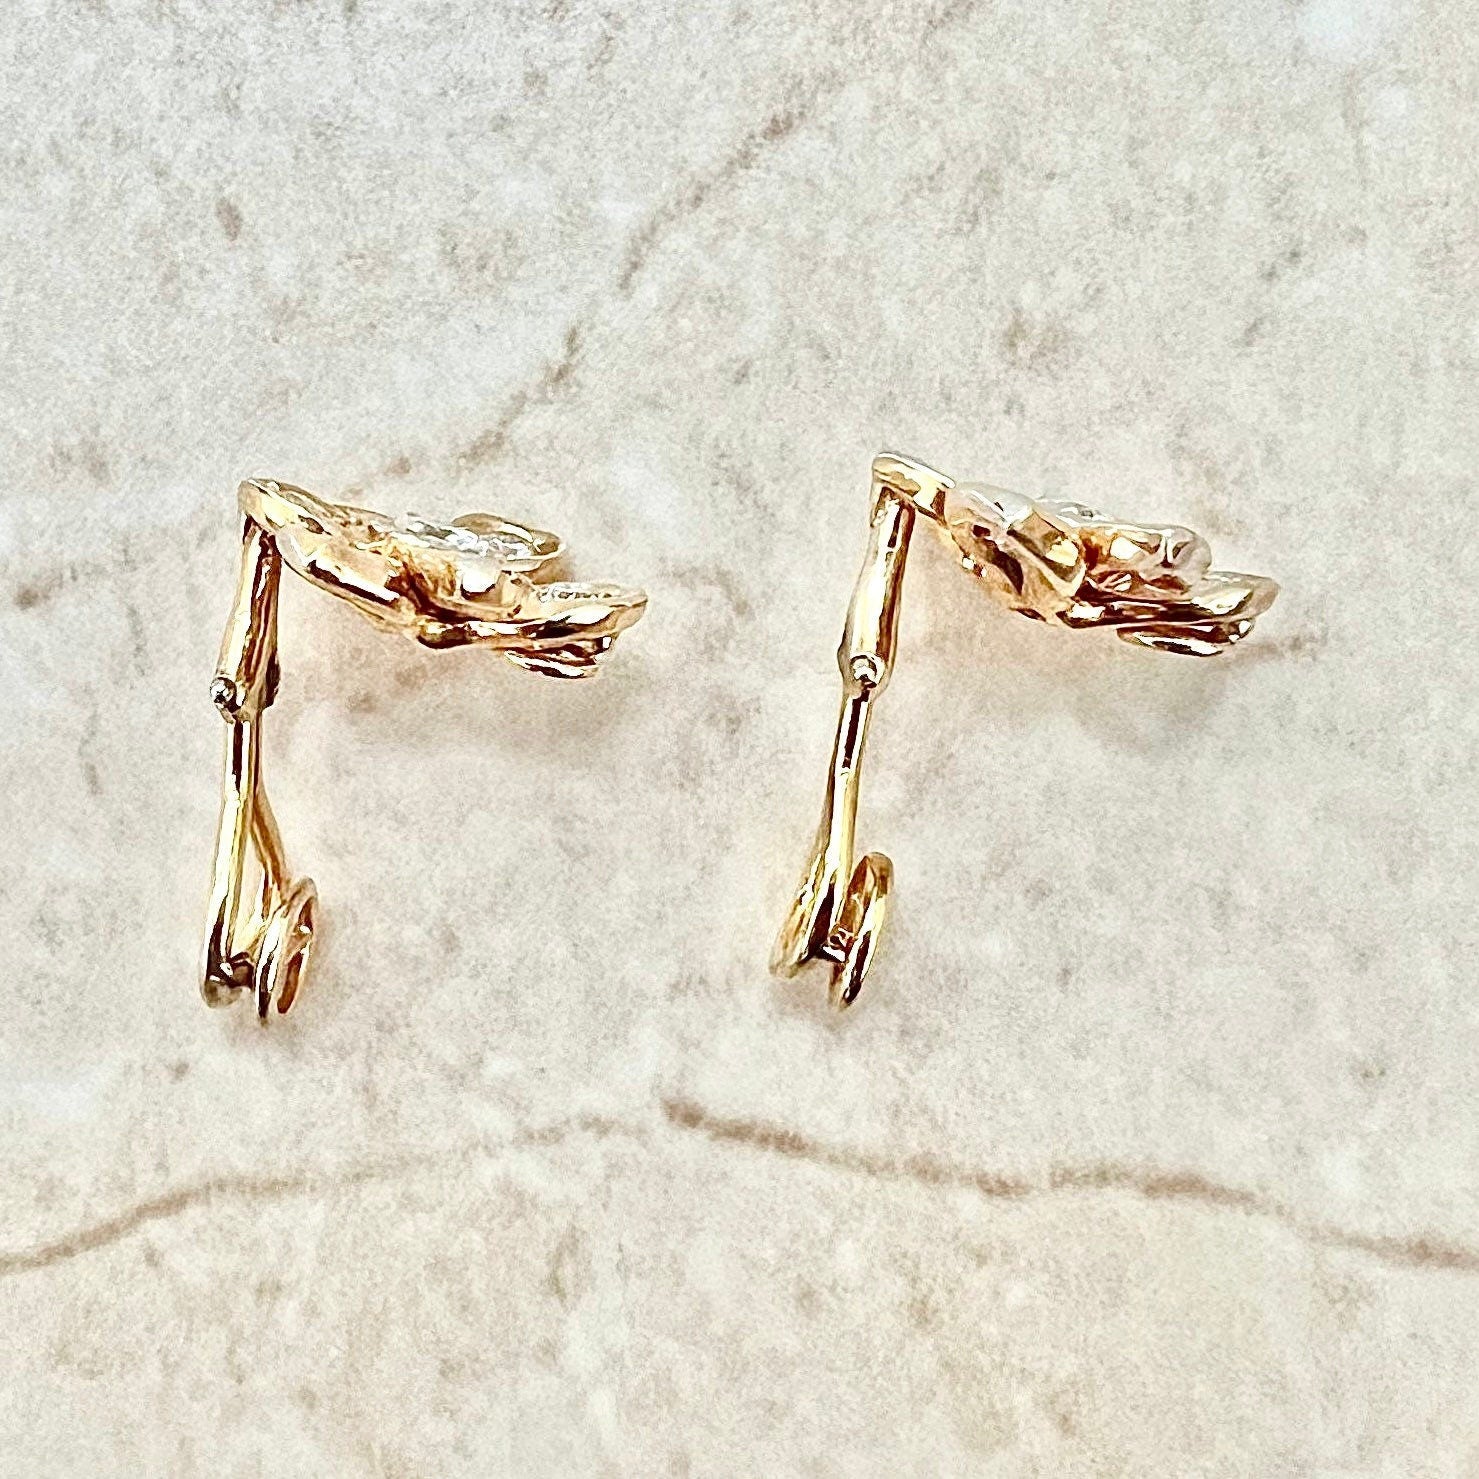 Rare Vintage 18K Pink Diamond Halo Earrings By Carvin French - Rose Gold Diamond Earrings - Diamond Flower Earrings - Handcrafted Earrings